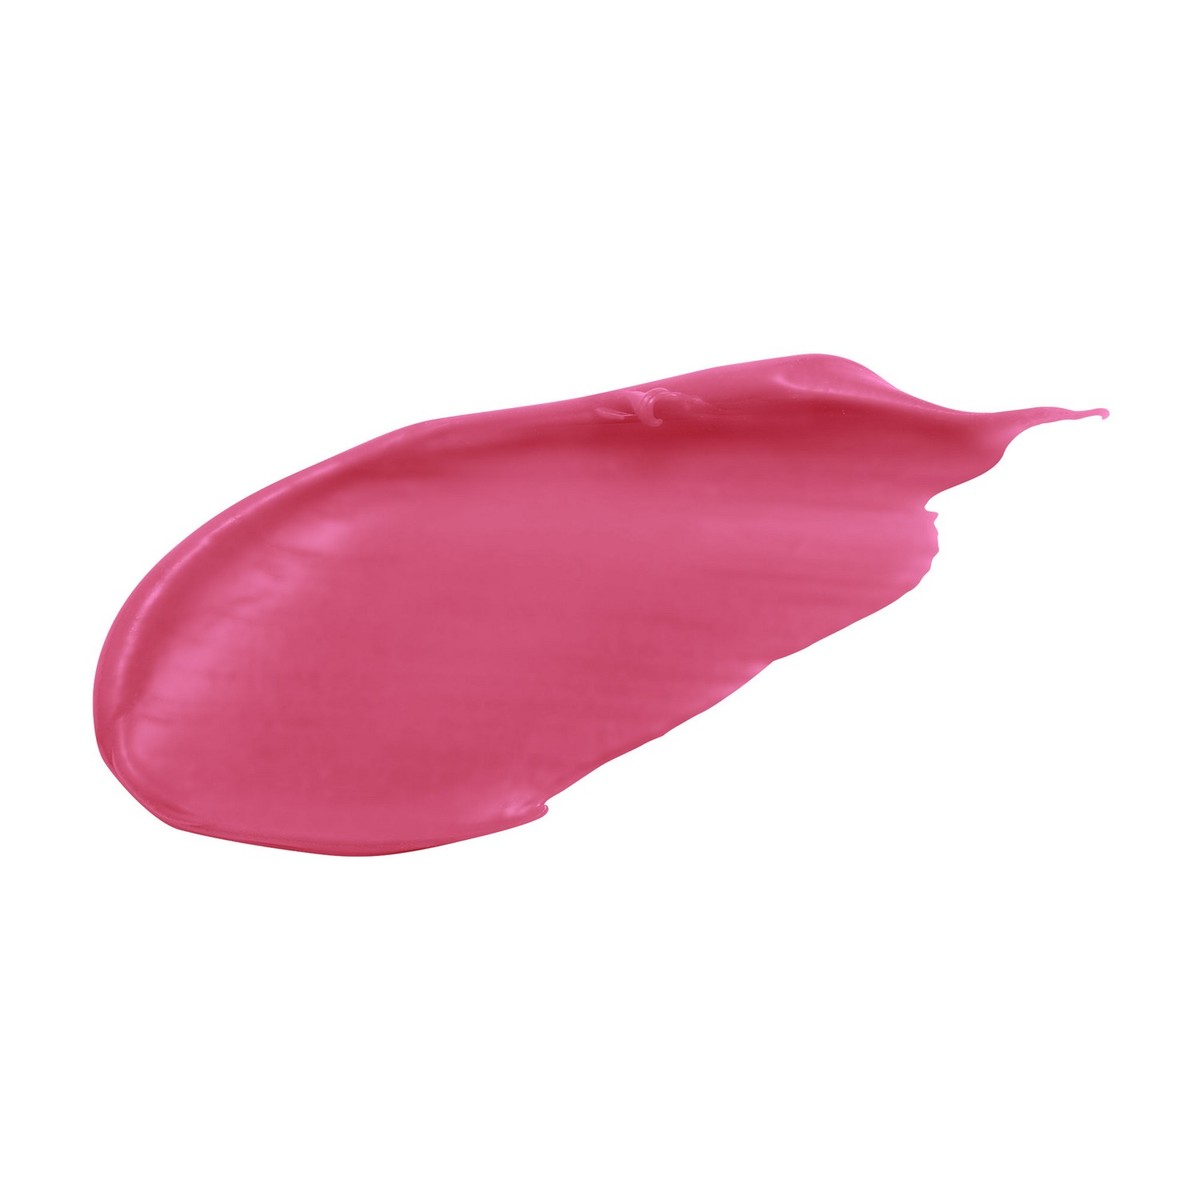 Max Factor Colour Elixir Lipstick 665 Pomegranate 1pc